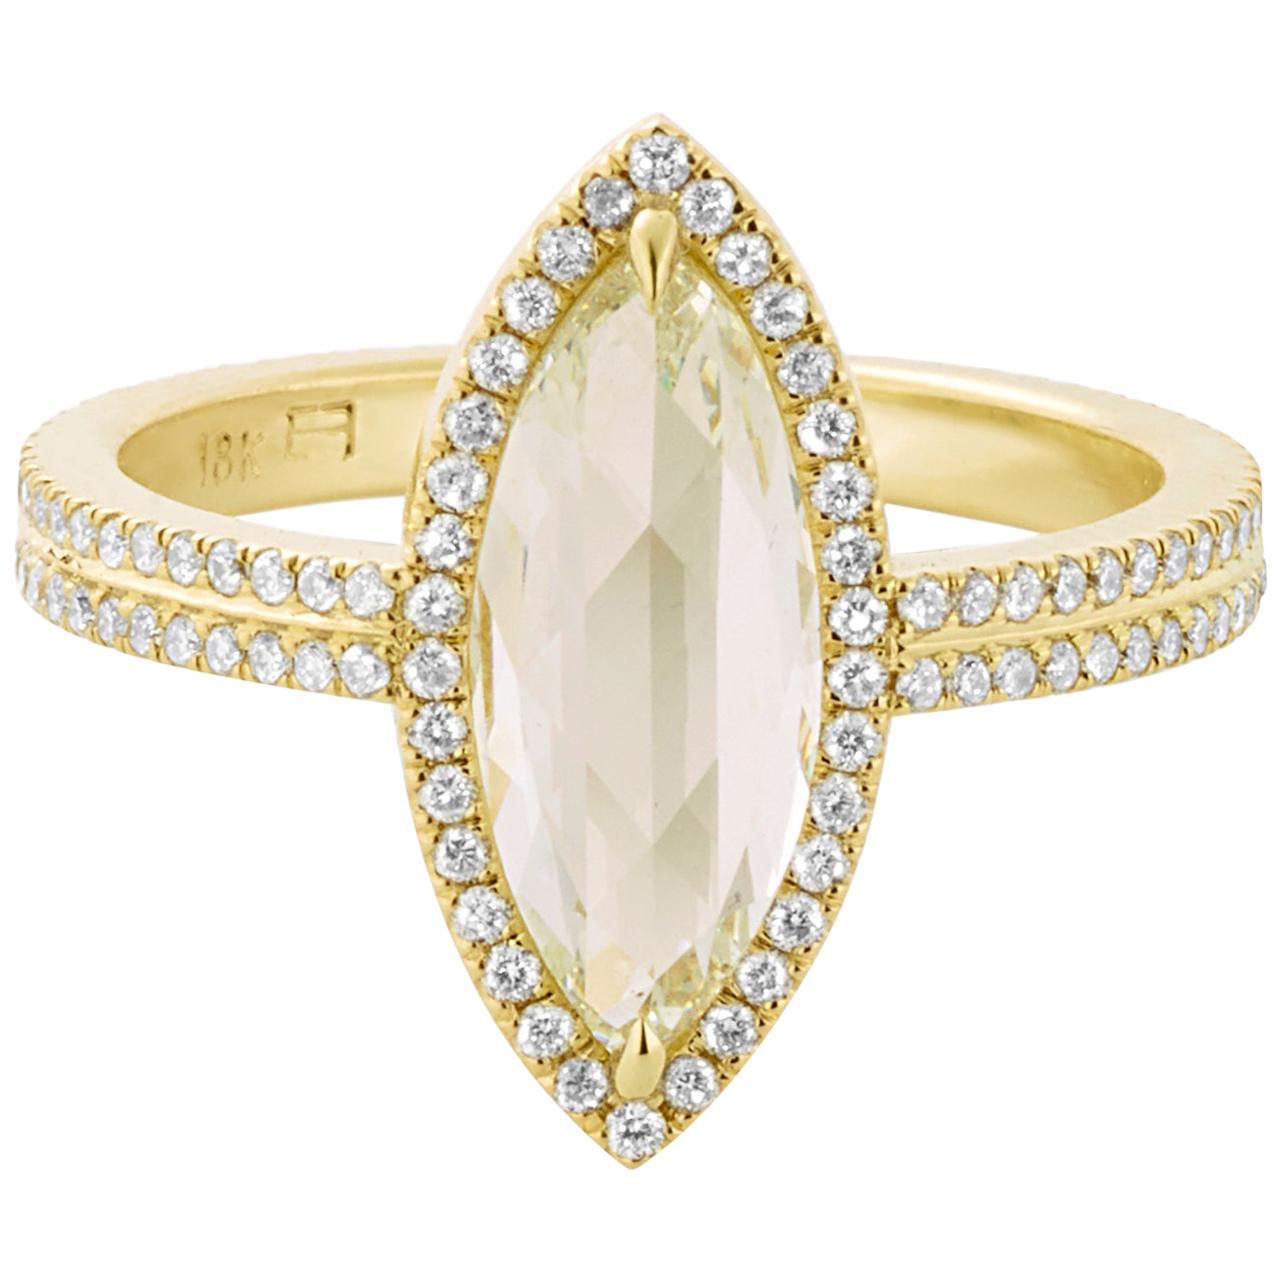 Eva Fehren 1.96 Carat Fancy Light Yellow Diamond Ring in 18 Karat Yellow Gold For Sale